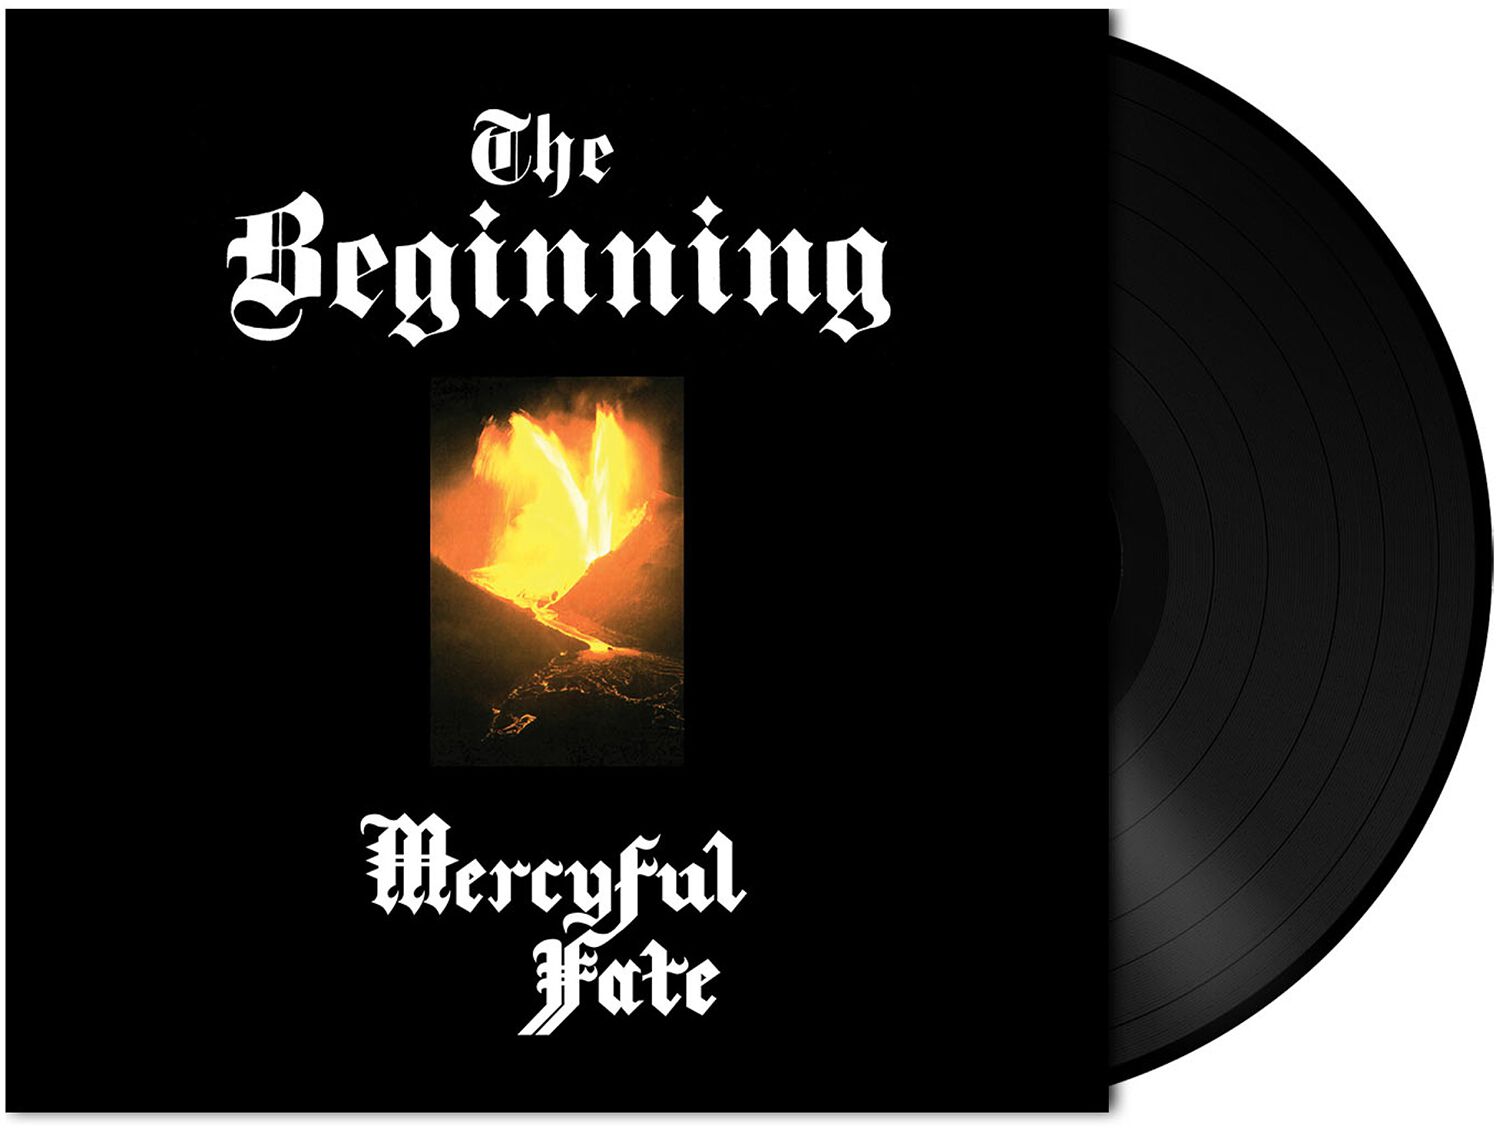 Mercyful Fate The beginning LP schwarz